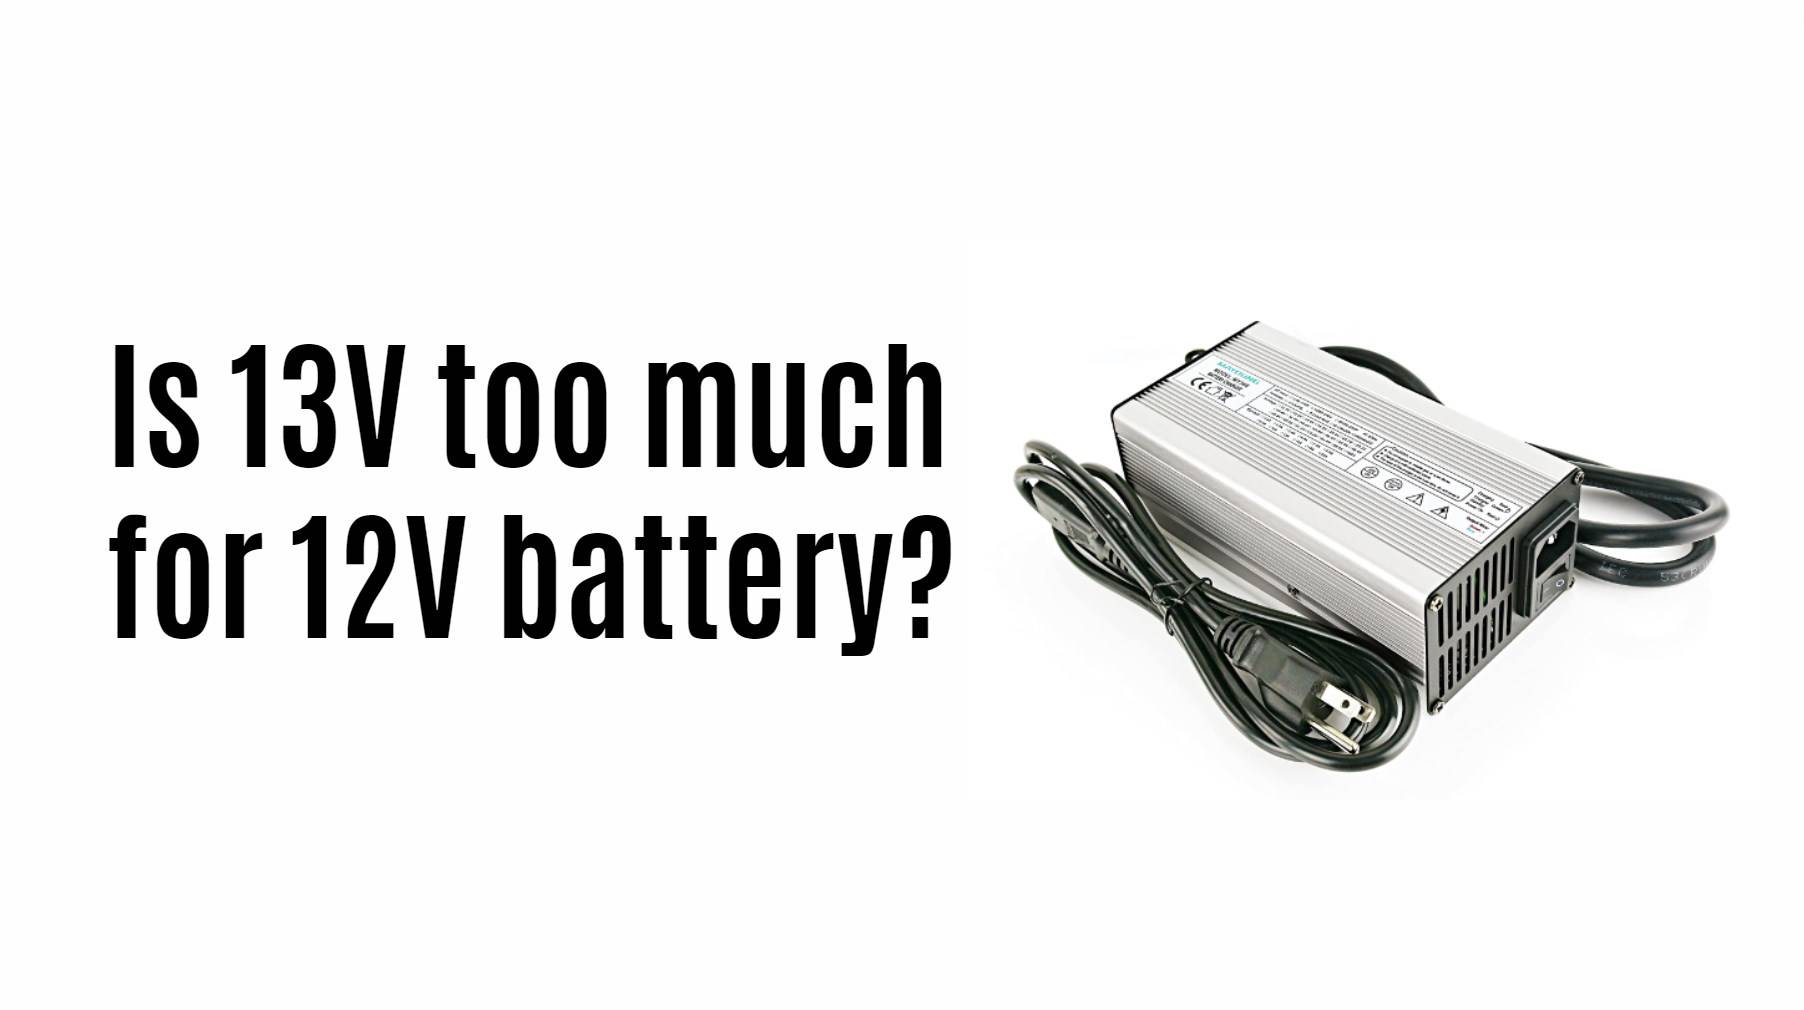 Is 13v too much for 12v battery?